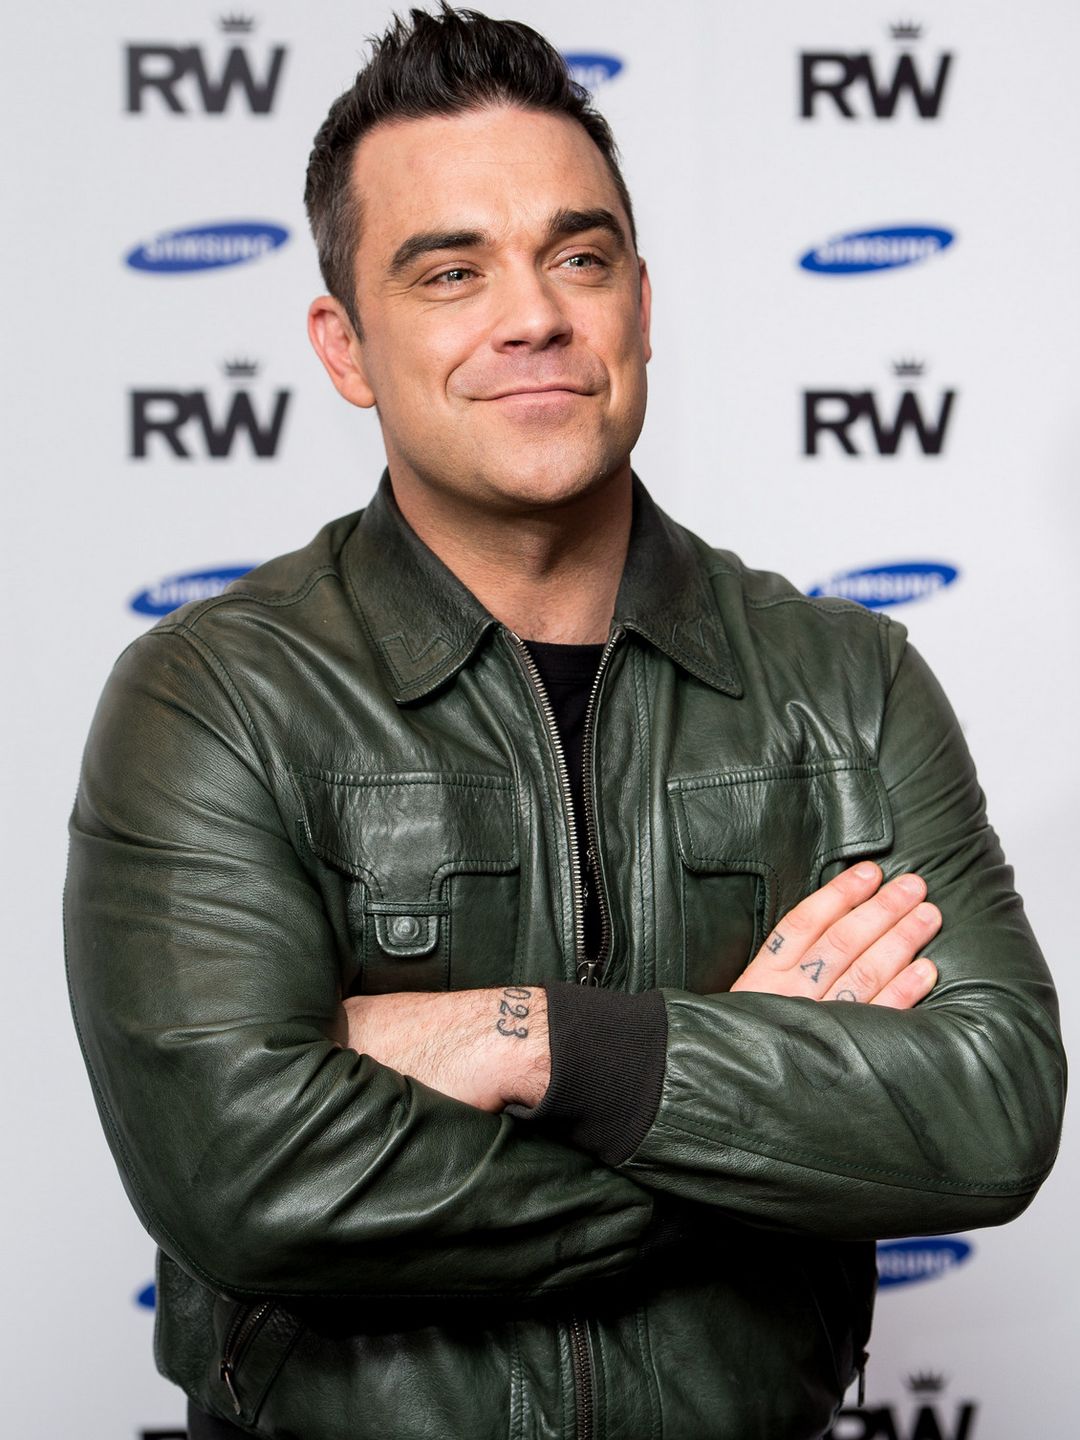 Robbie Williams story of success